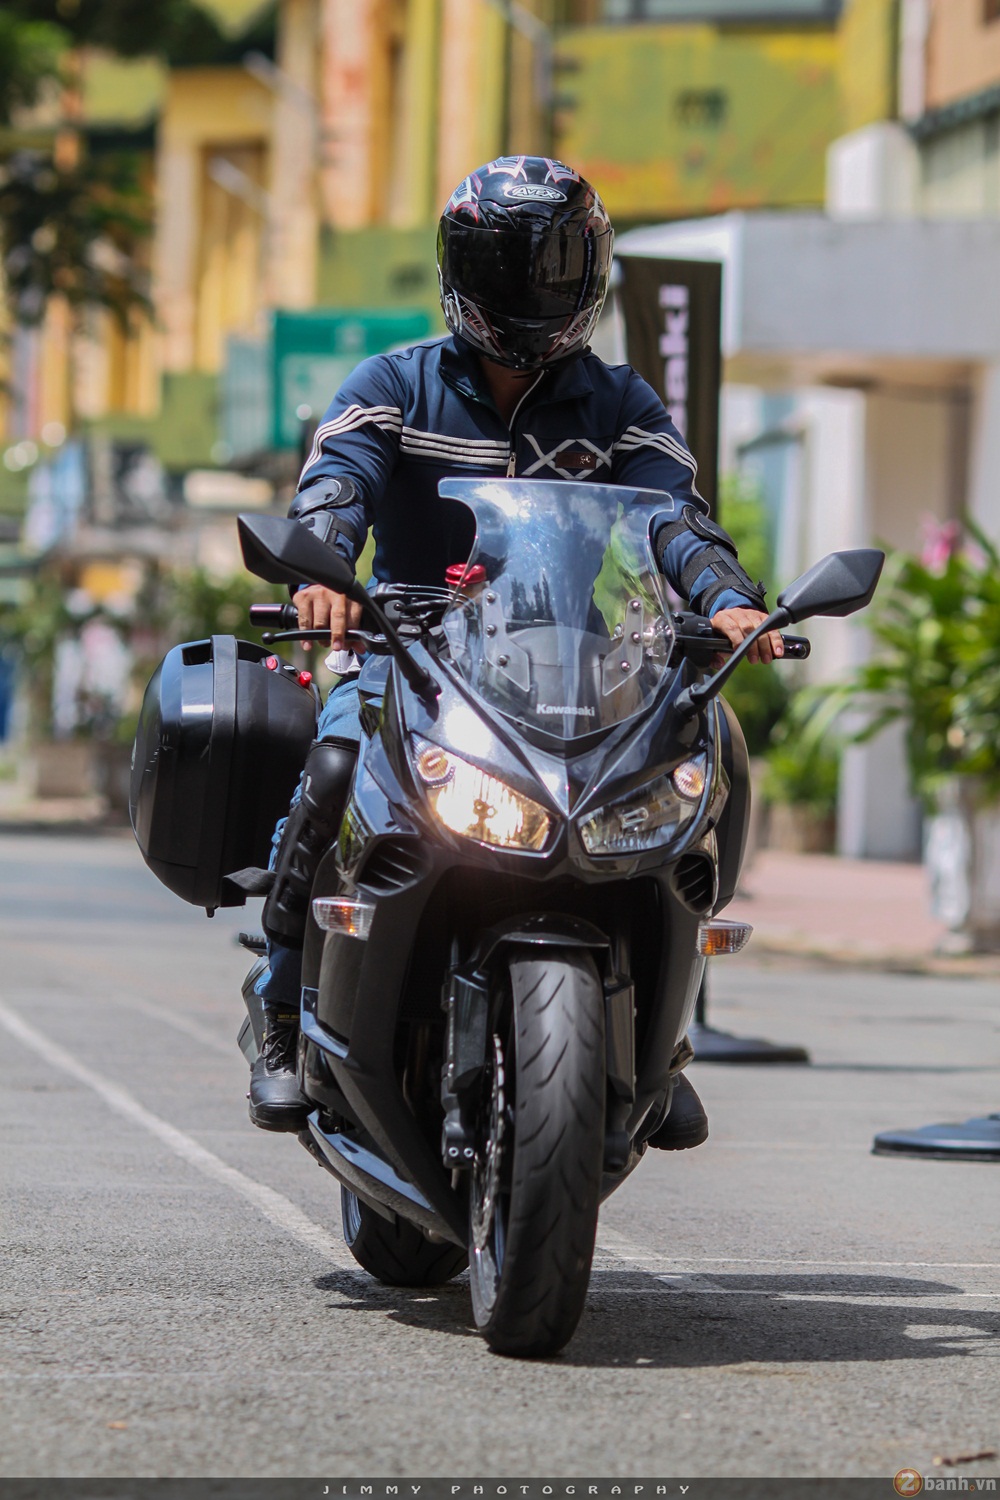 Test Ride cung Kawasaki Quang Phuong Motor trai nghiem dich thuc - 17